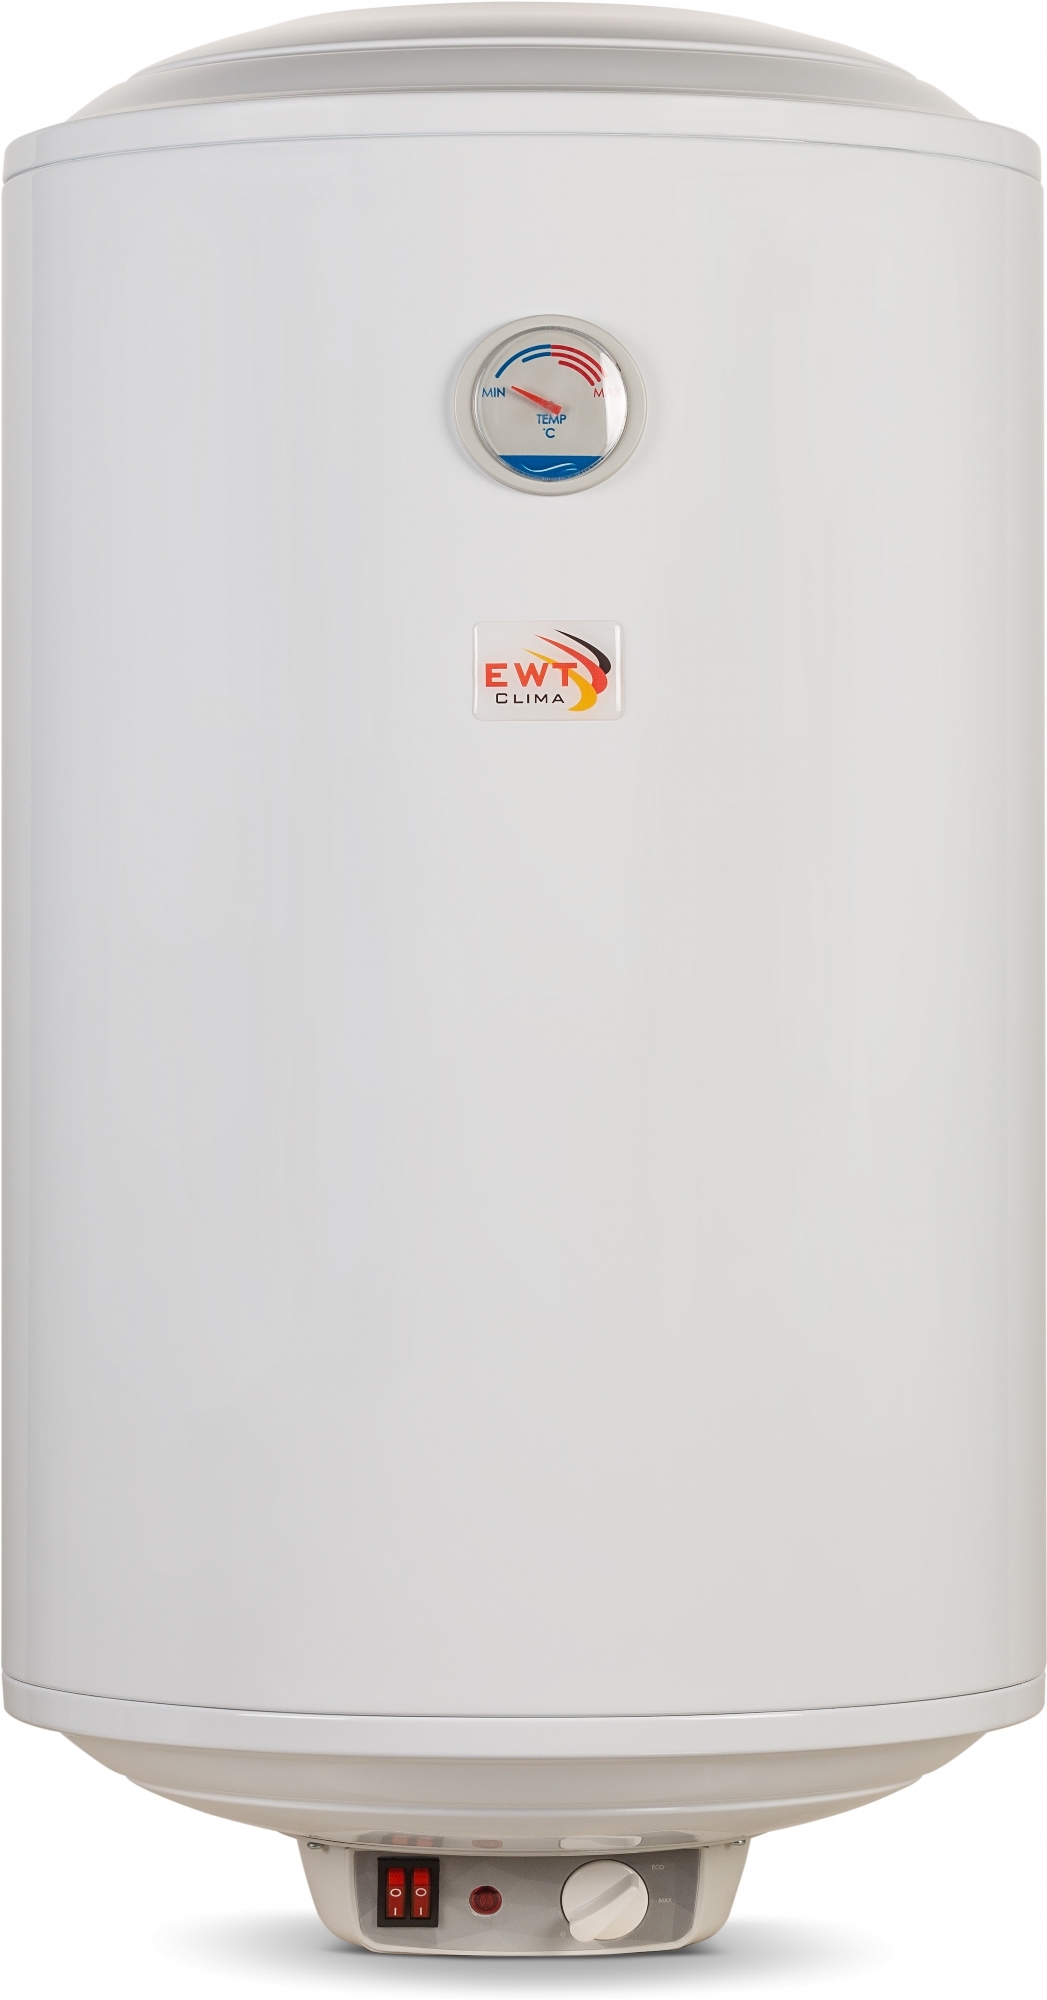 Бойлер EWT Clima Runde Dry AWH/M 100 V в интернет-магазине, главное фото